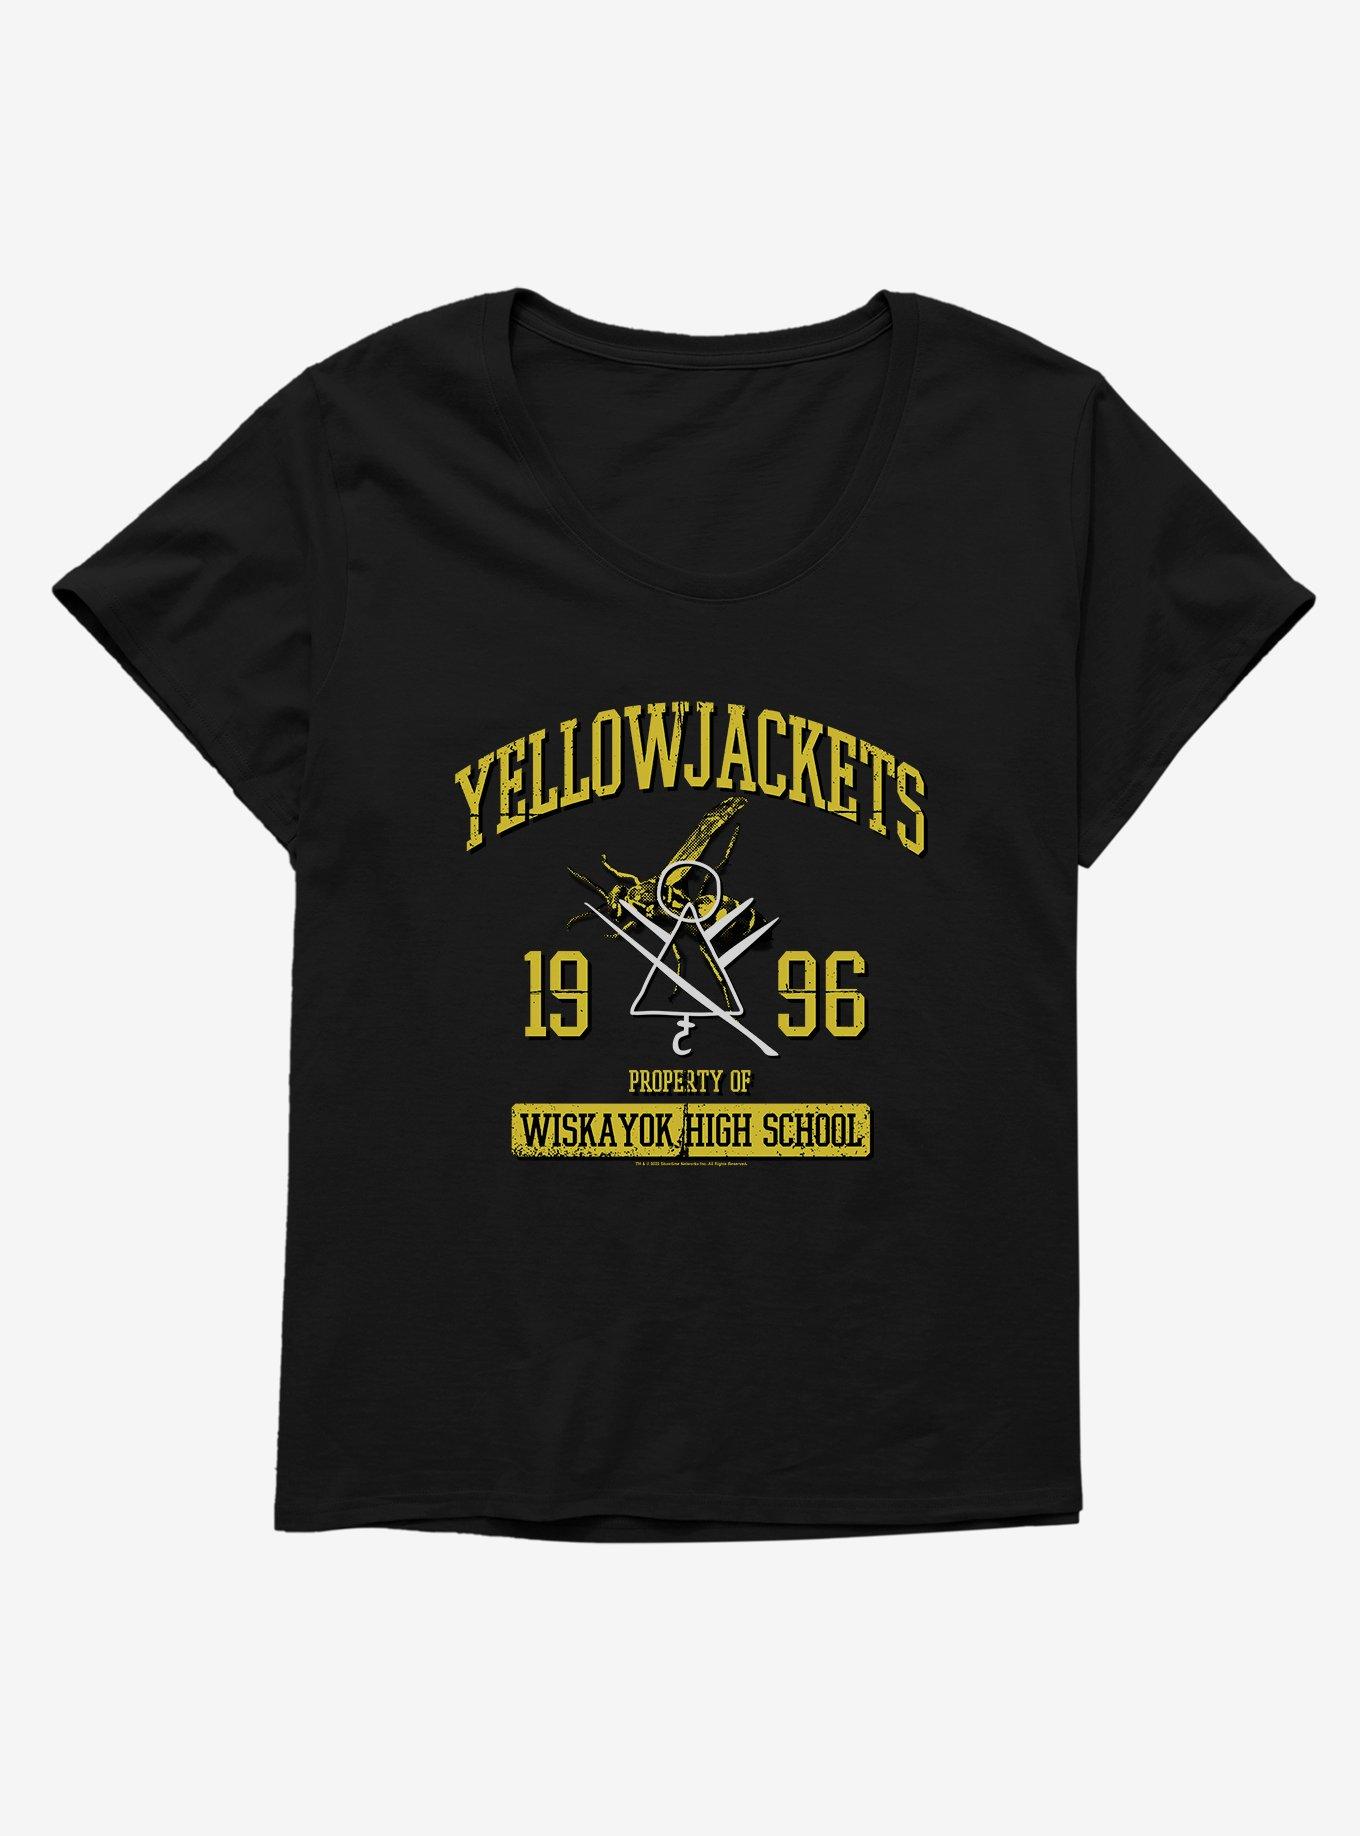 Yellowjackets Property Of Wiskayok High School Womens T-Shirt Plus Size, BLACK, hi-res